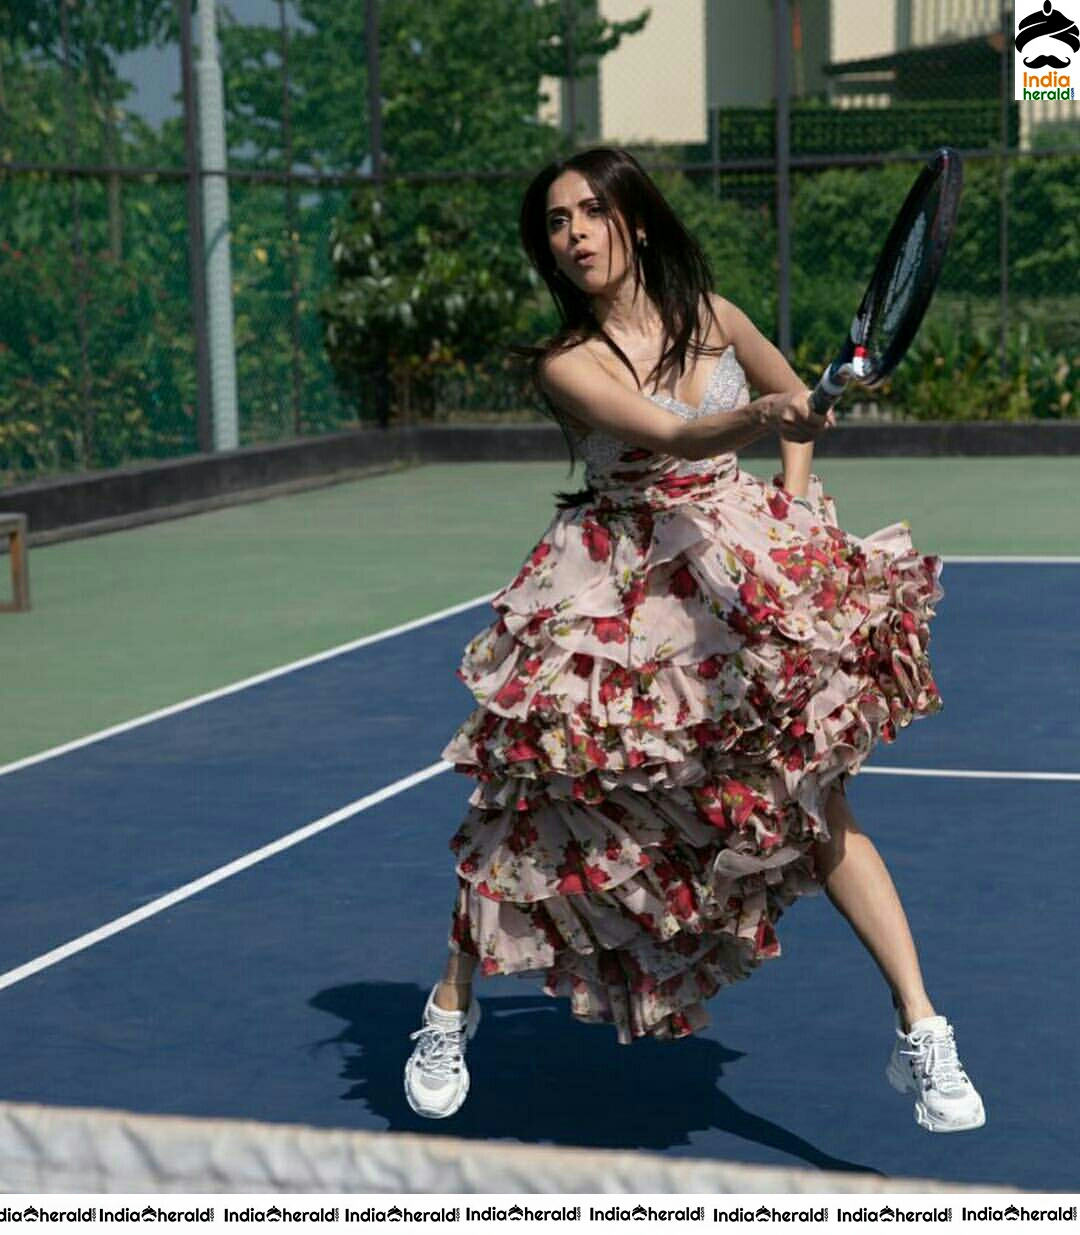 Hot Nushrat Bharucha Playing Tennis In A Sexy Way